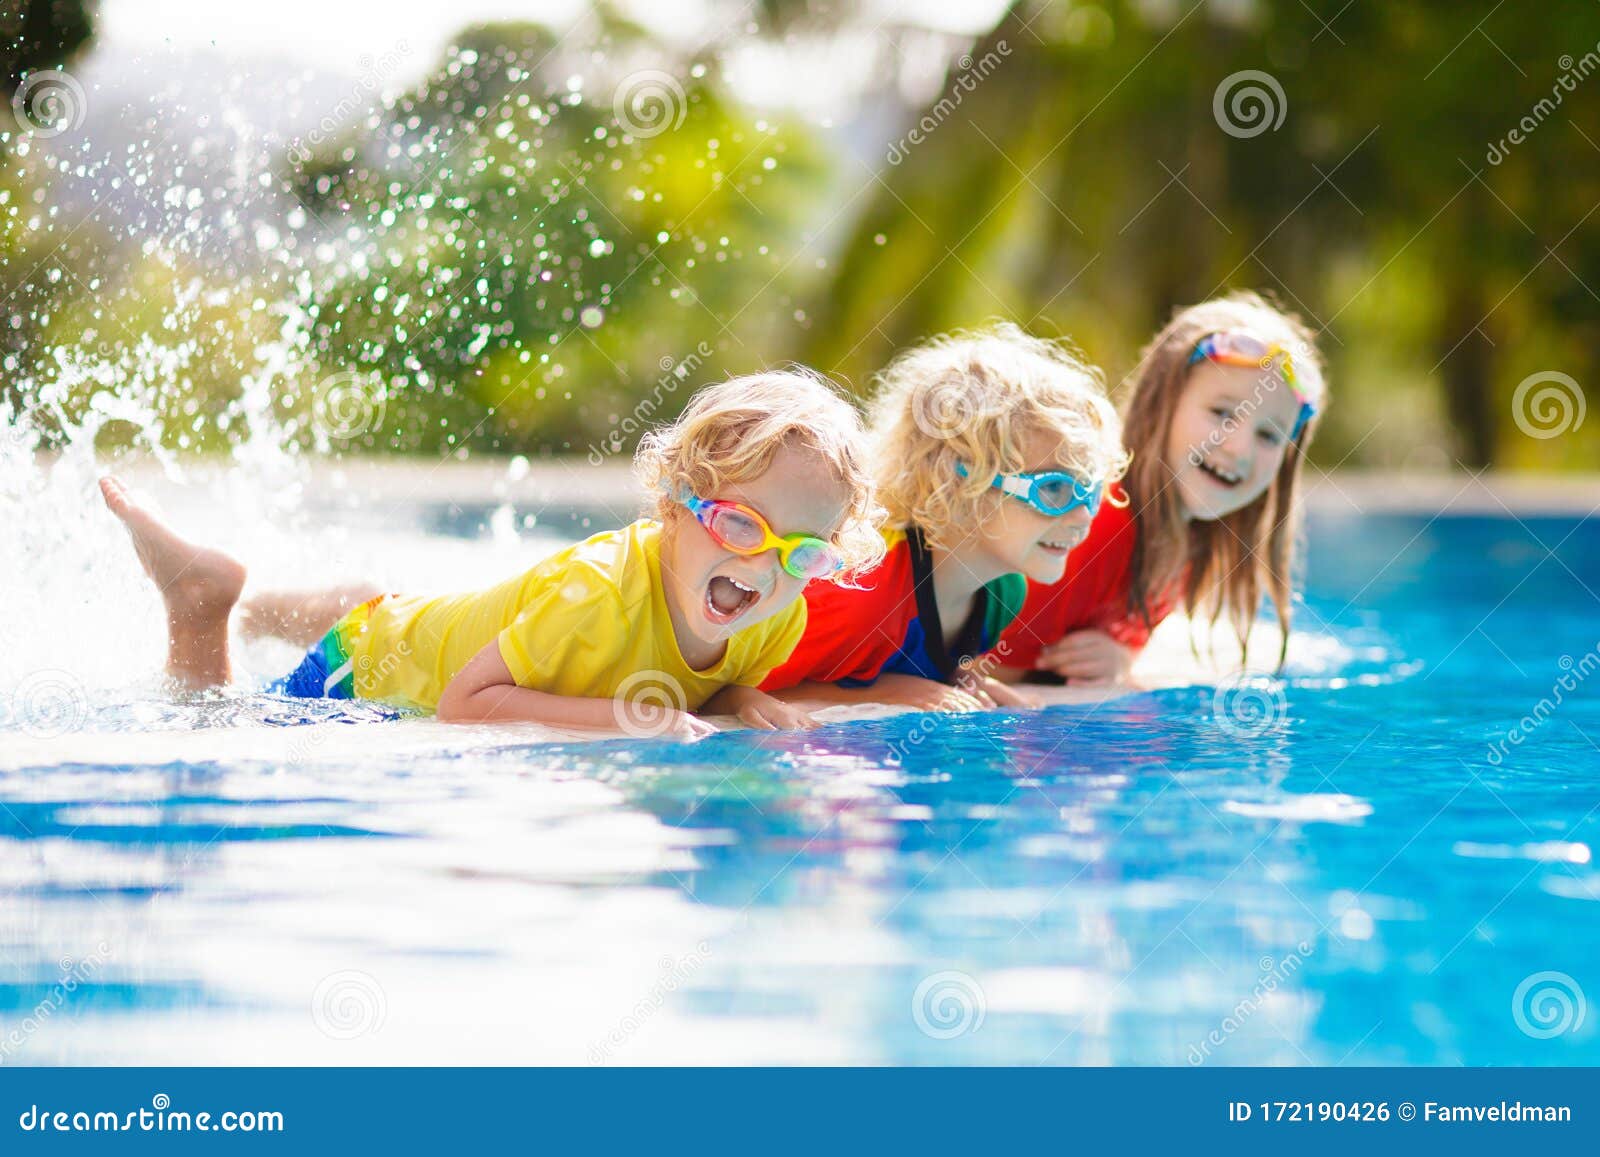 kids in swimming pool. children swim. family fun